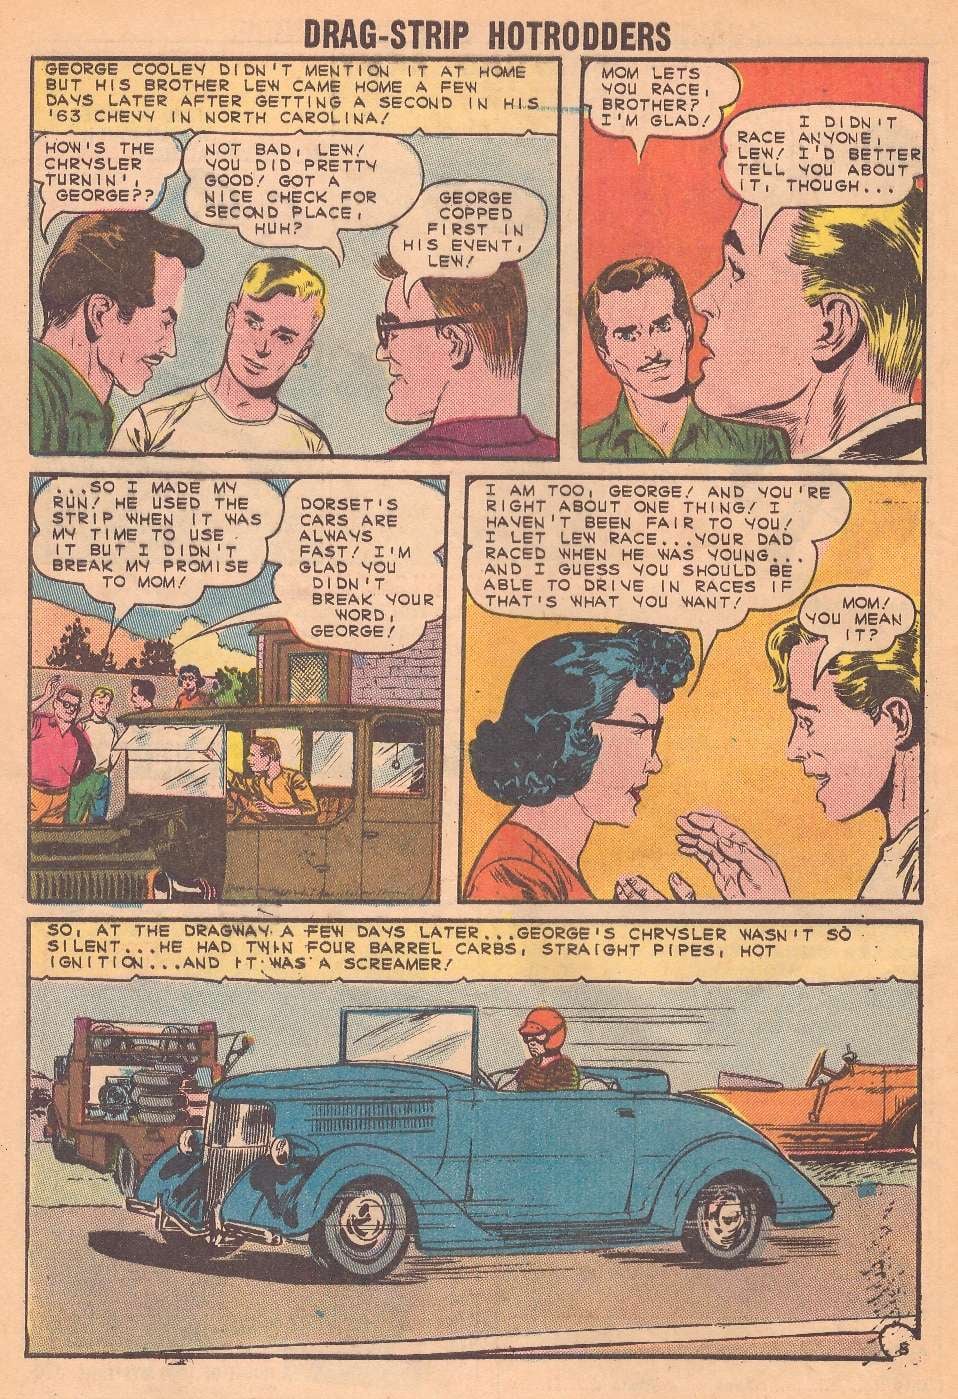 Drag-Strip Hotrodders - 60s Us Comics - January 1965 - Page 2 13192010